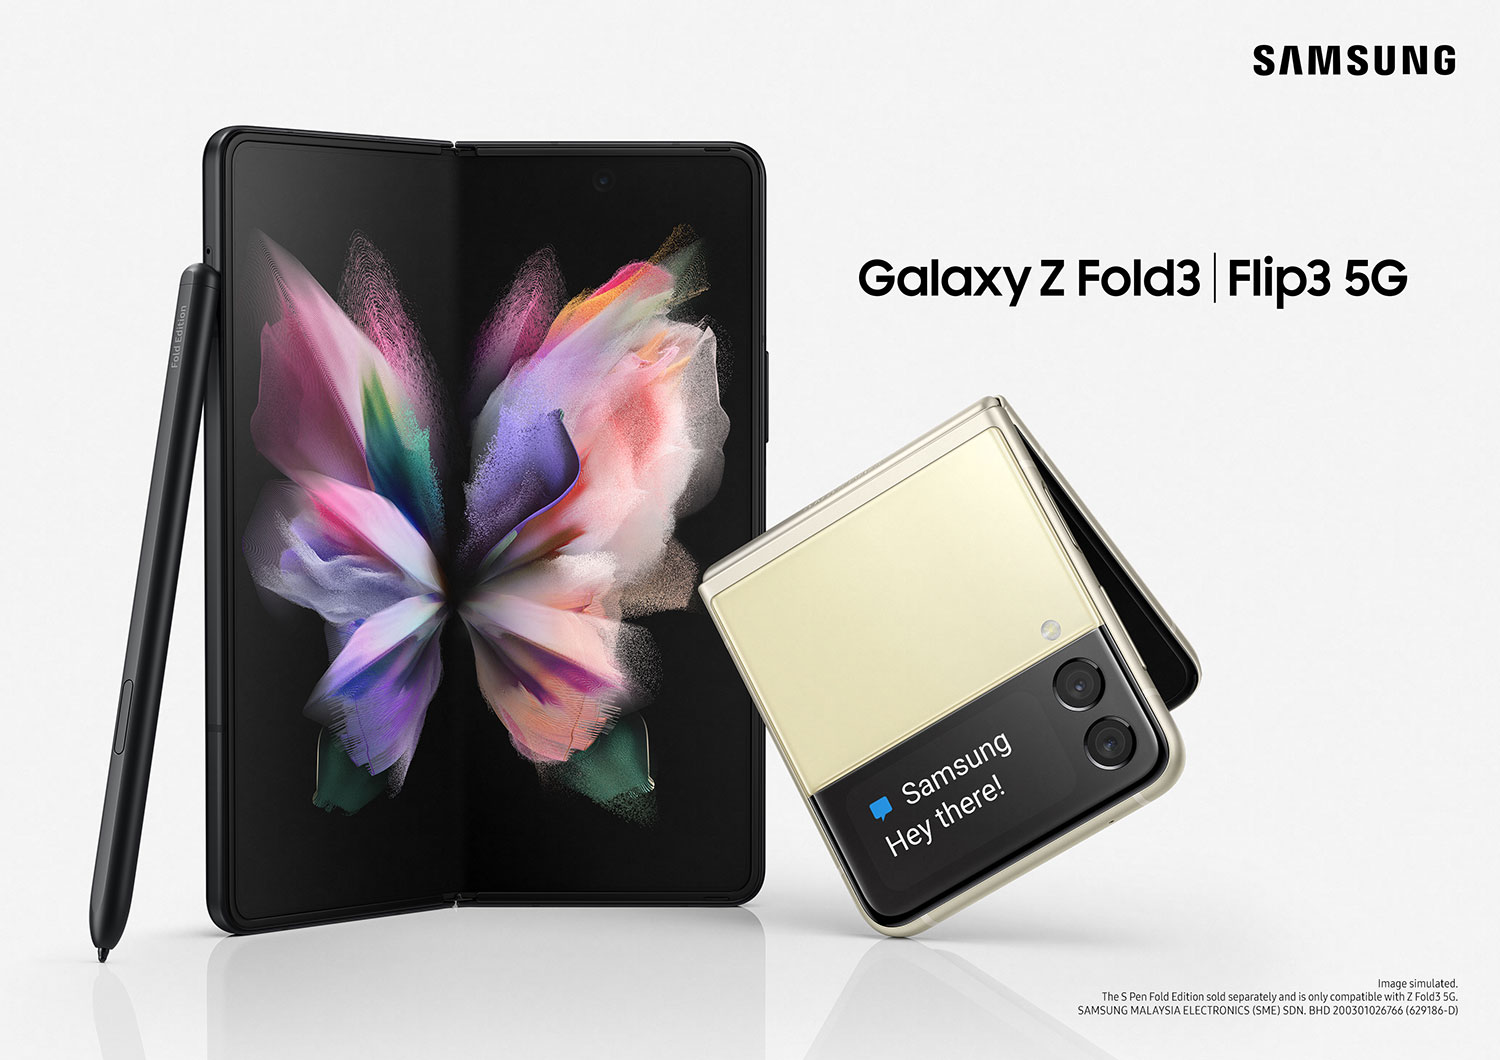 Samsung Galaxy Z Fold3 and Galaxy Z Flip3